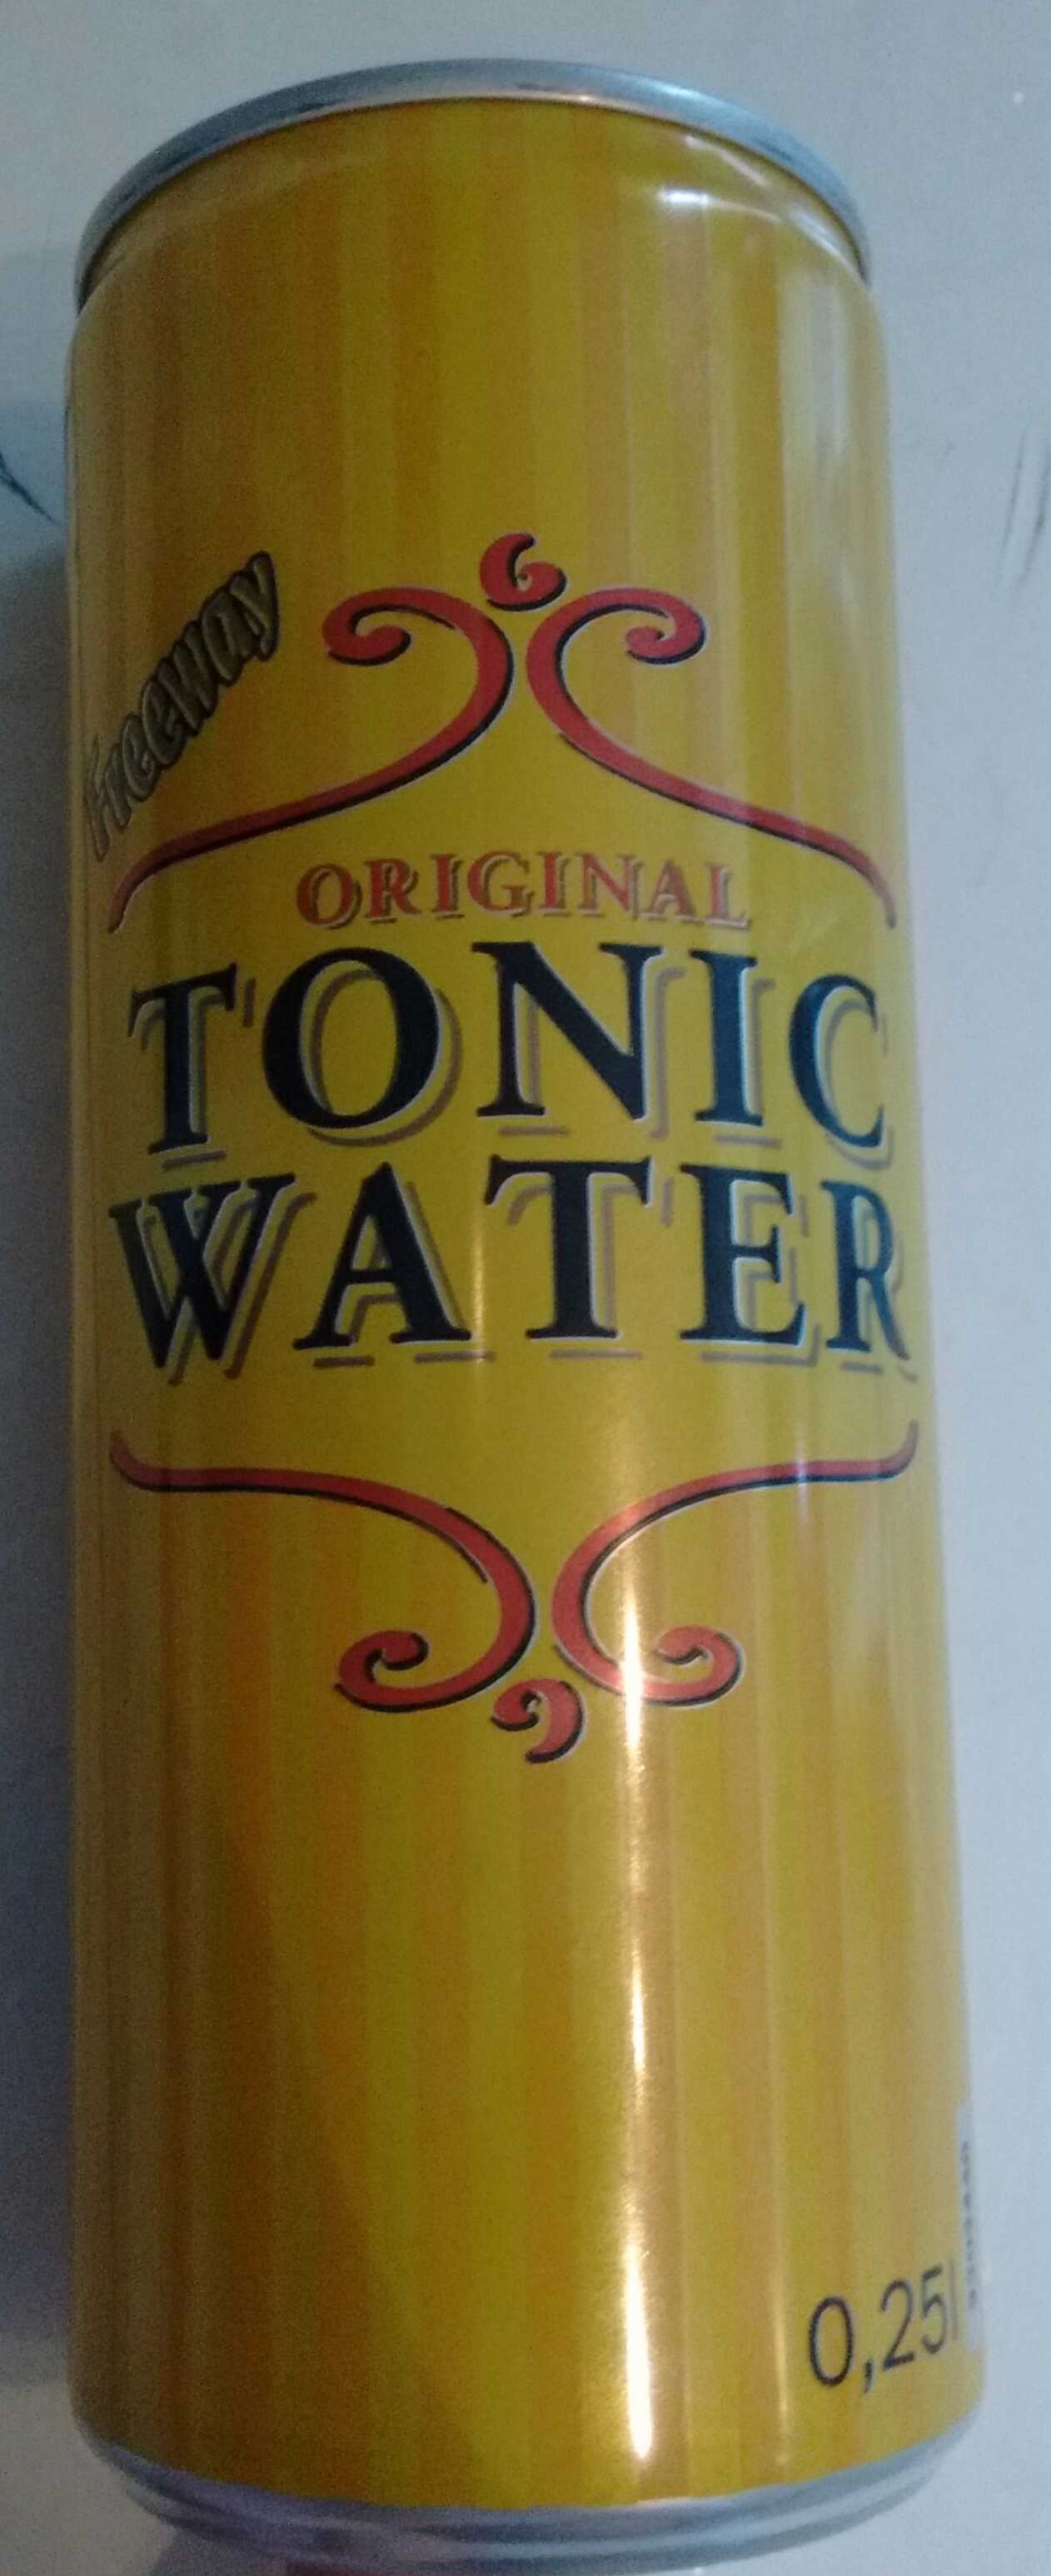 Original Tonic Water - Product - fr